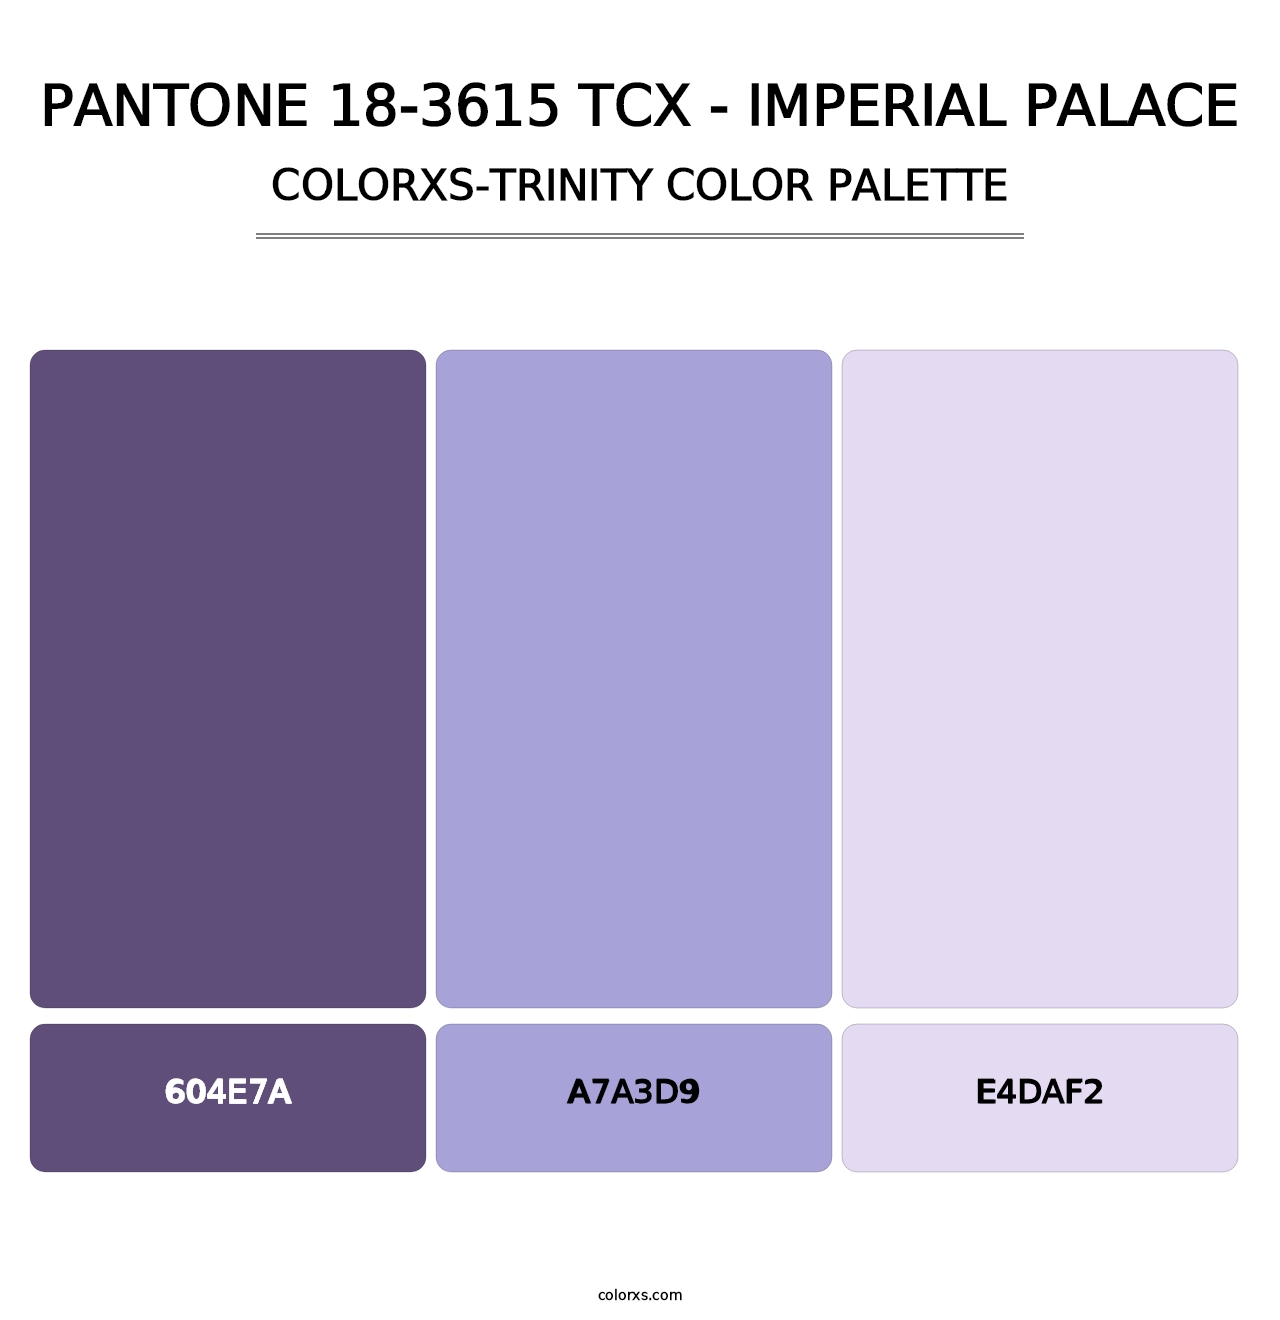 PANTONE 18-3615 TCX - Imperial Palace - Colorxs Trinity Palette